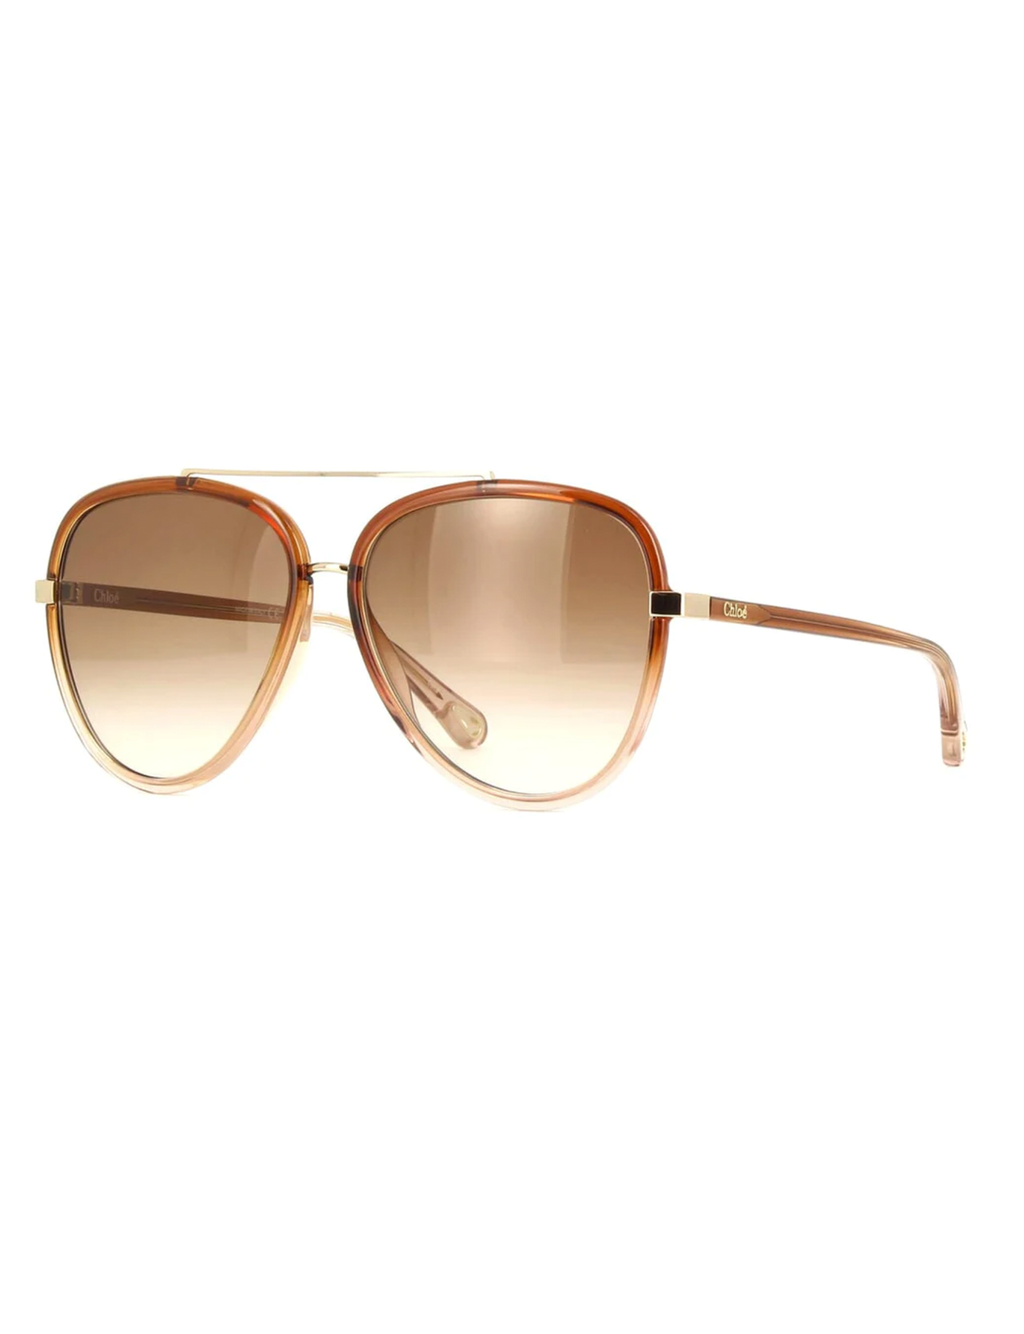 Square Oval Sunglasses, Brown